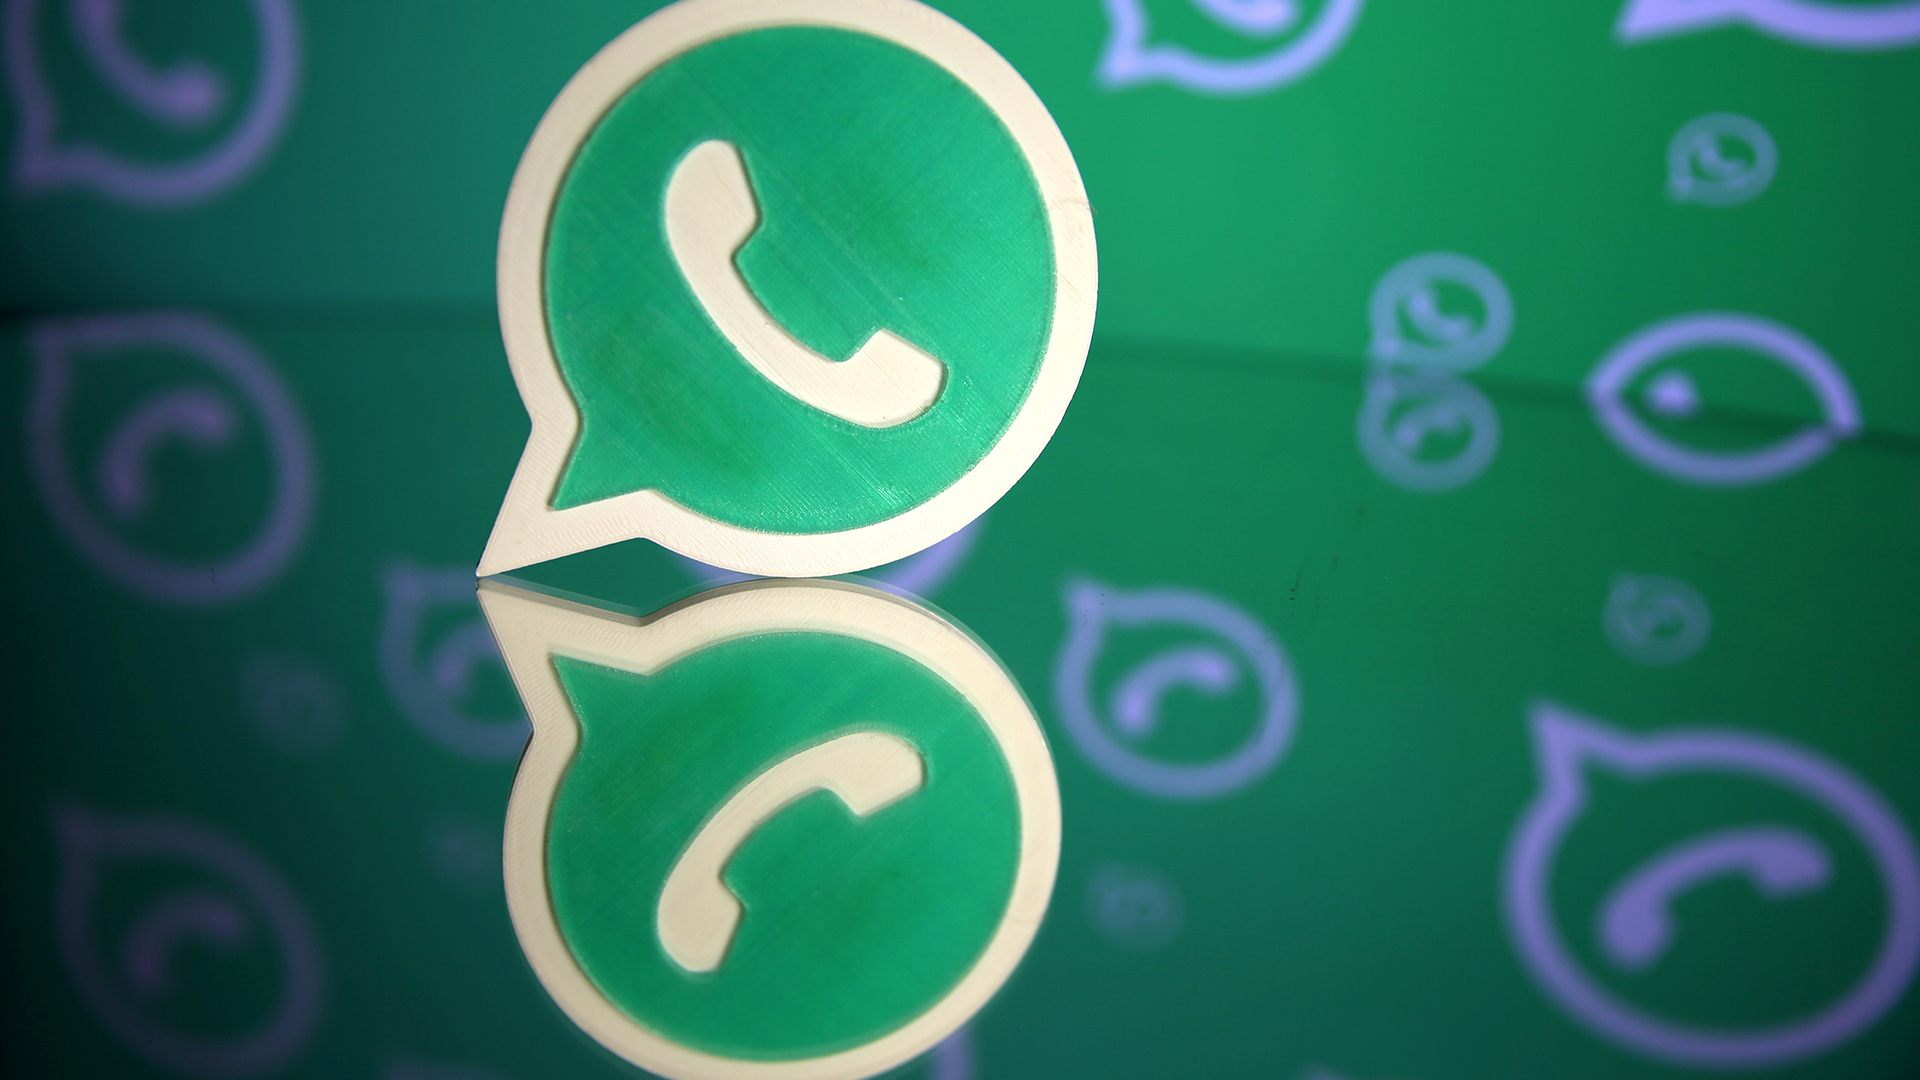 Un clon malicioso de WhatsApp se ha descargado más de un millón de veces